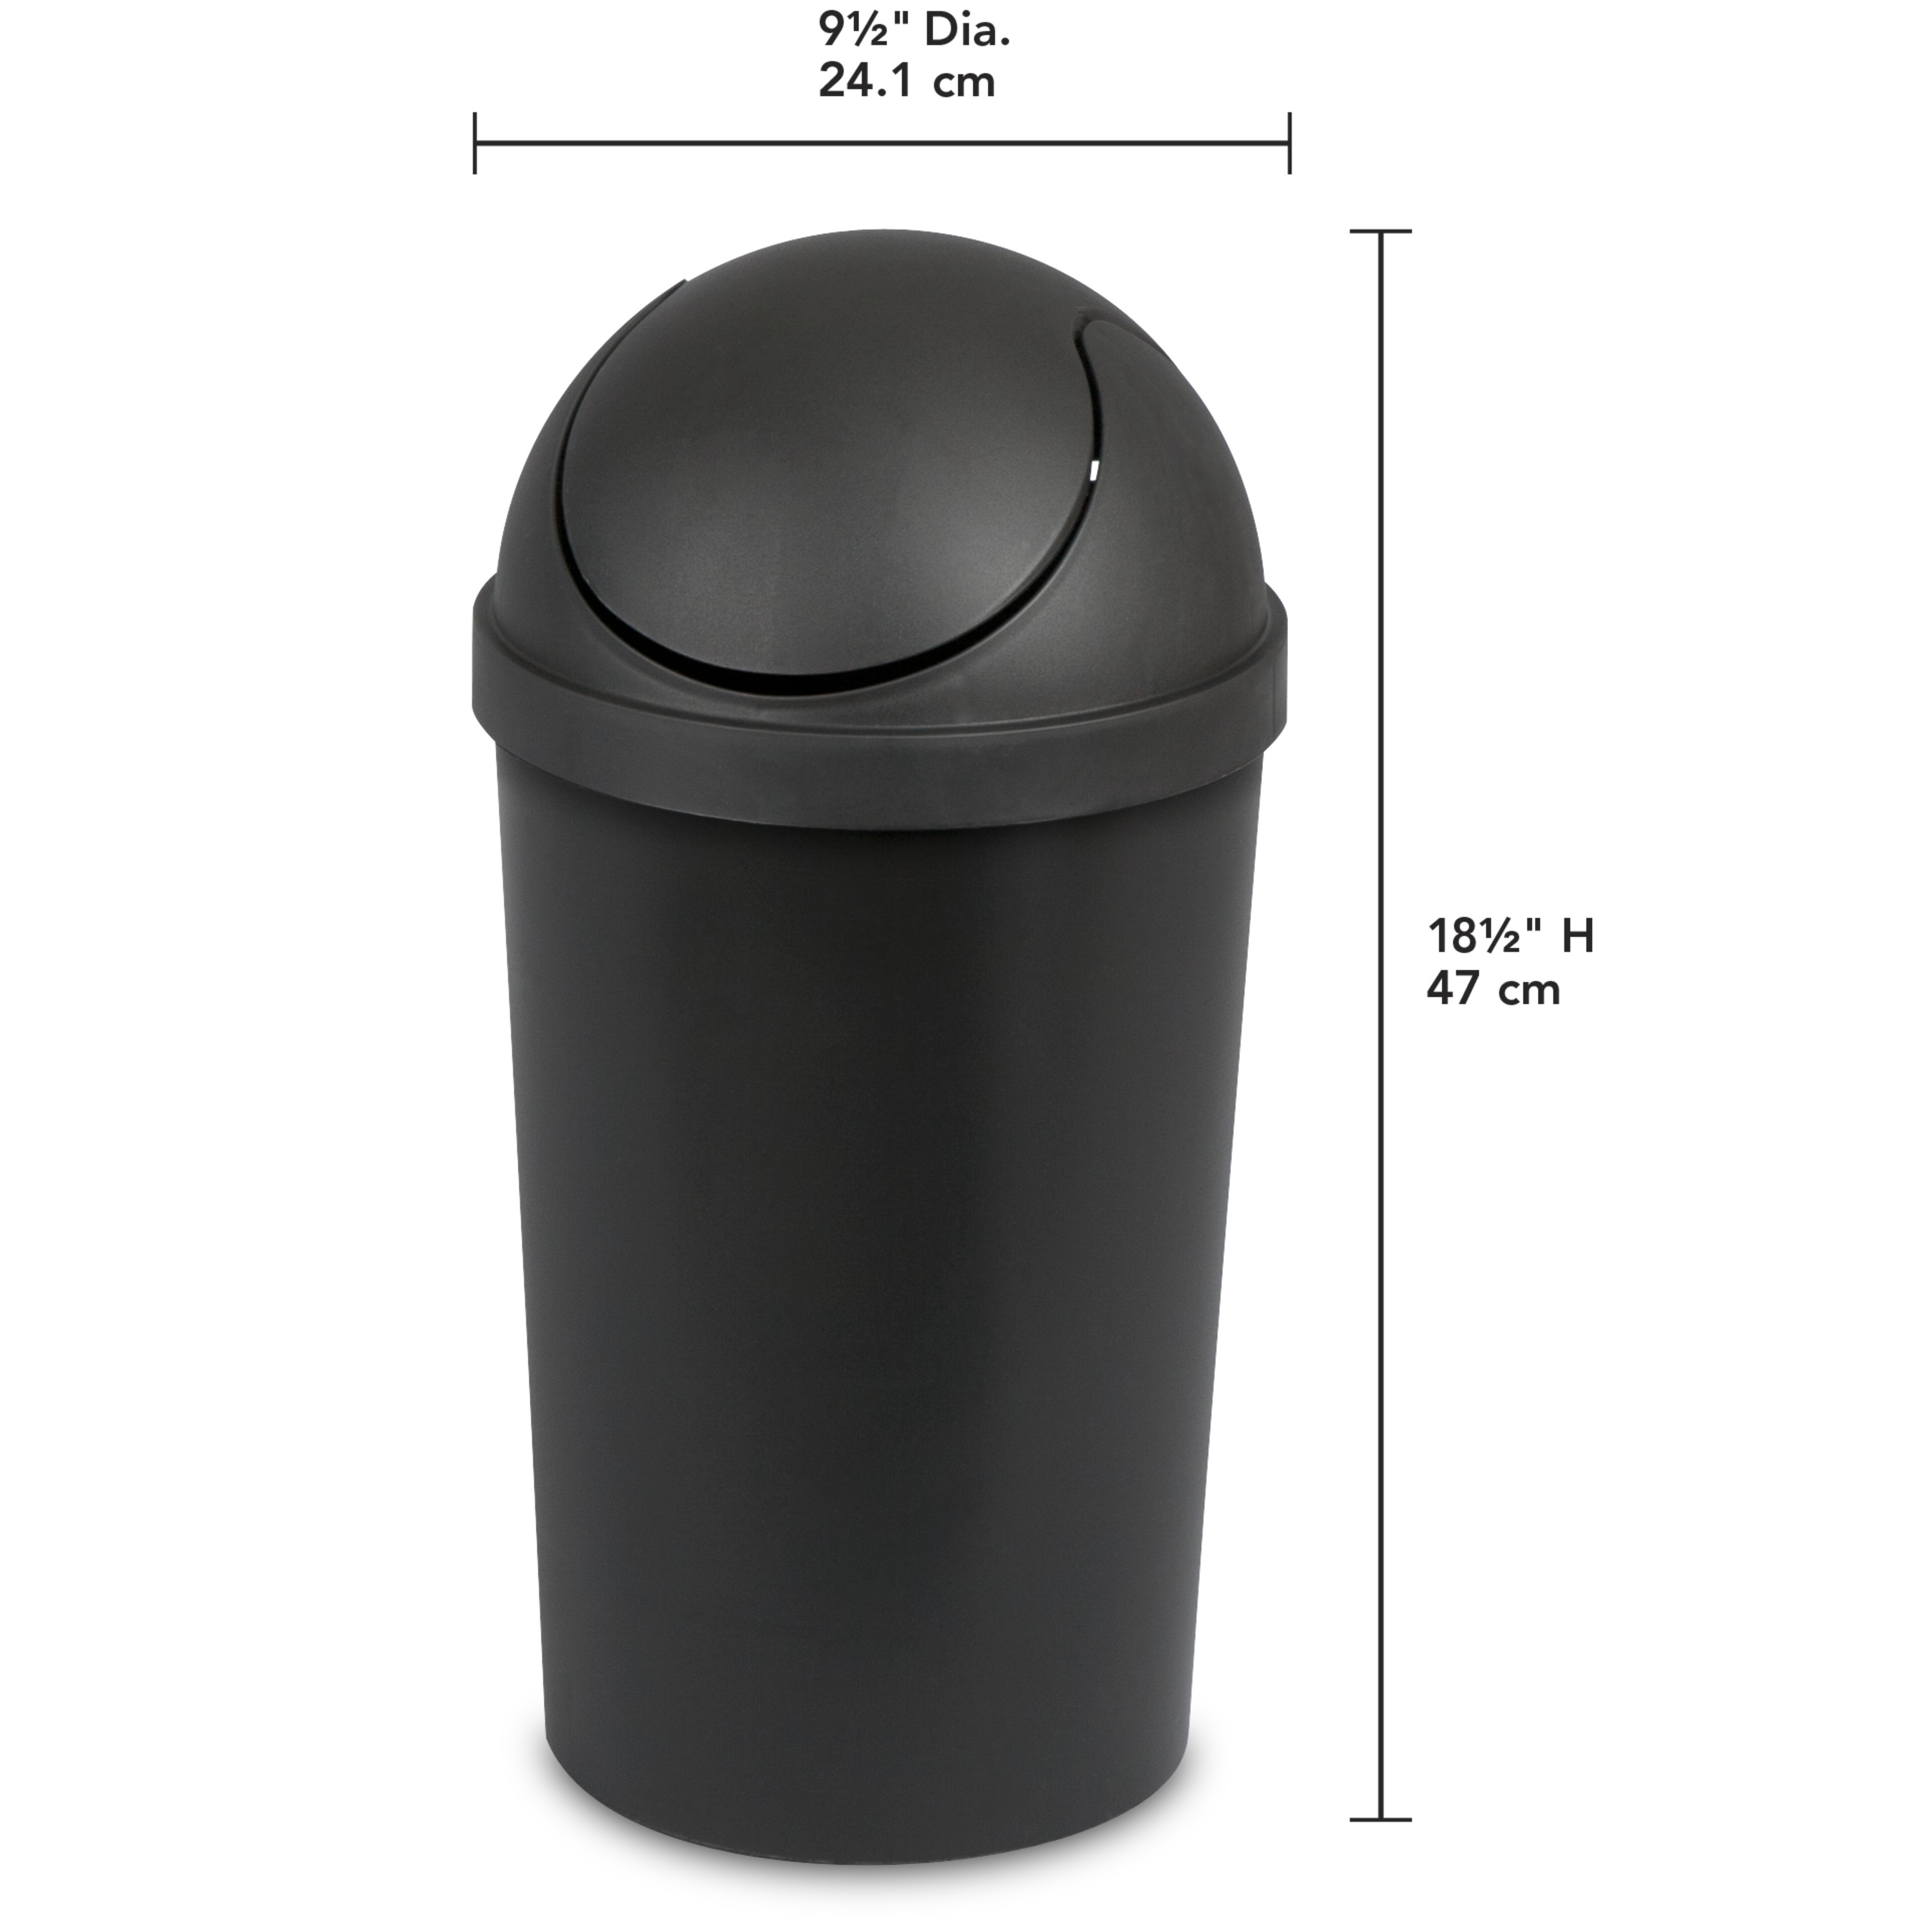 Sterilite 3 Gal. Round SwingTop Wastebasket Plastic, Black - image 2 of 9